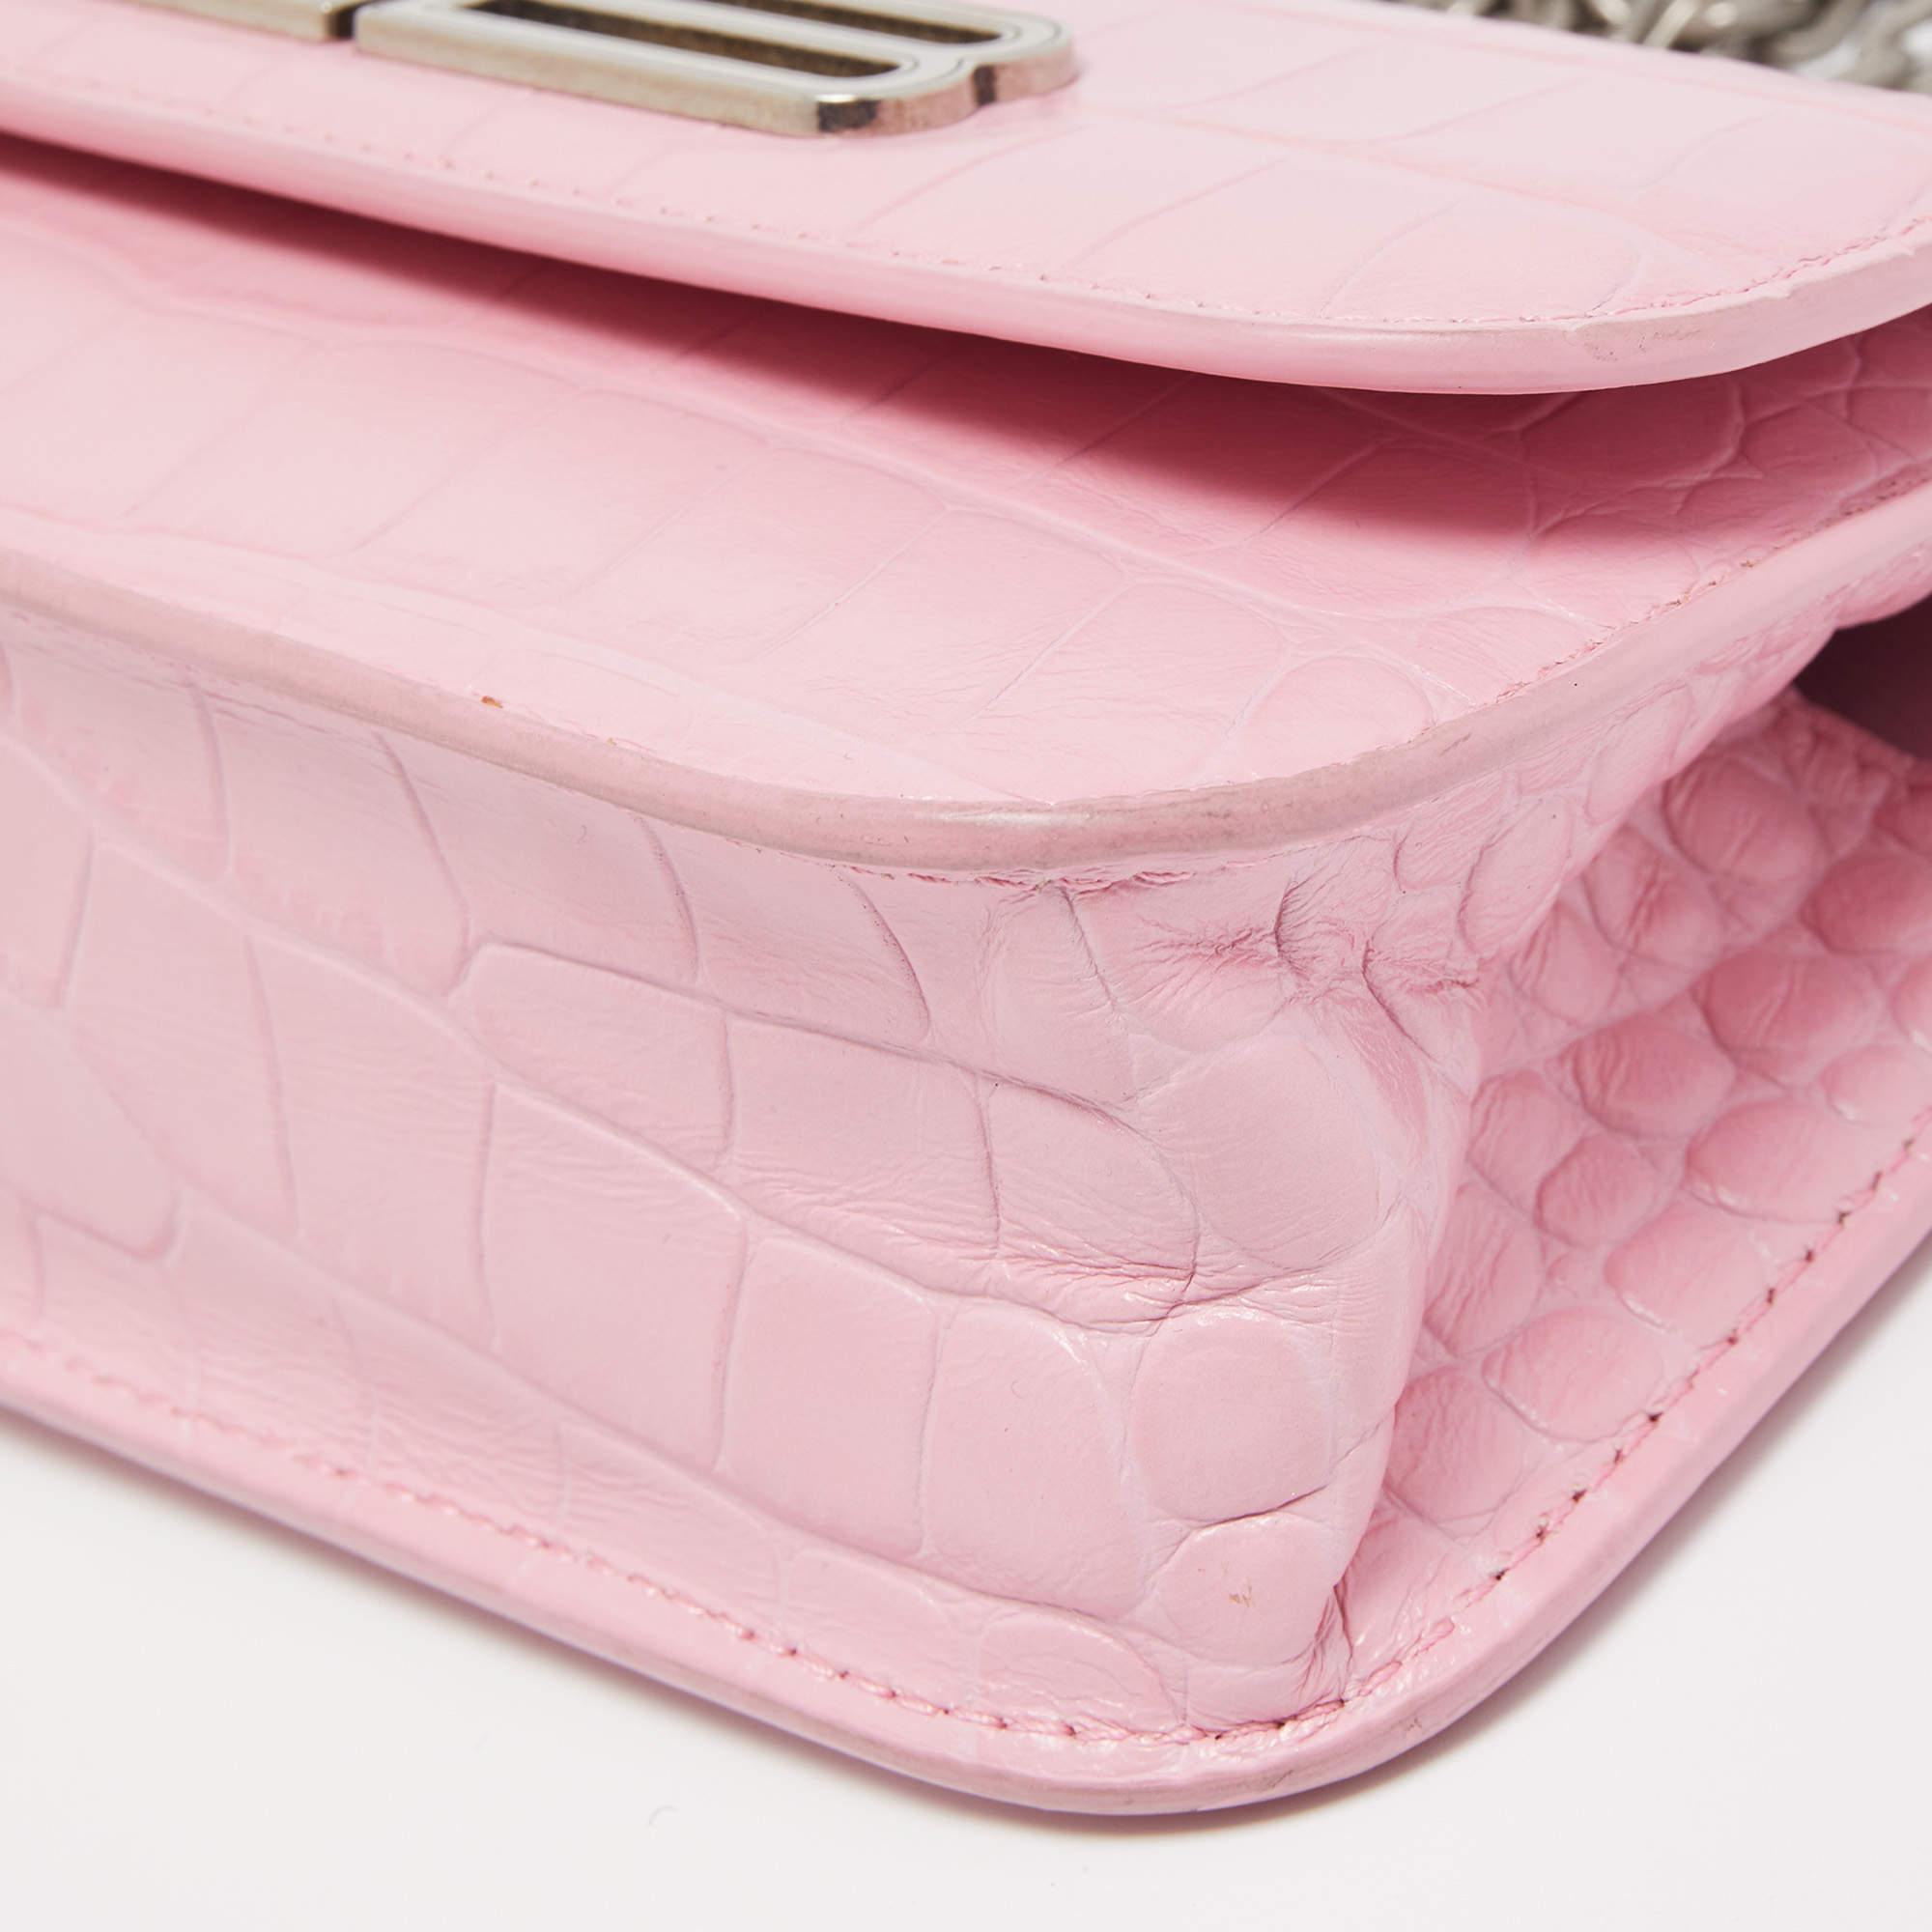 pink crocodile chanel bag